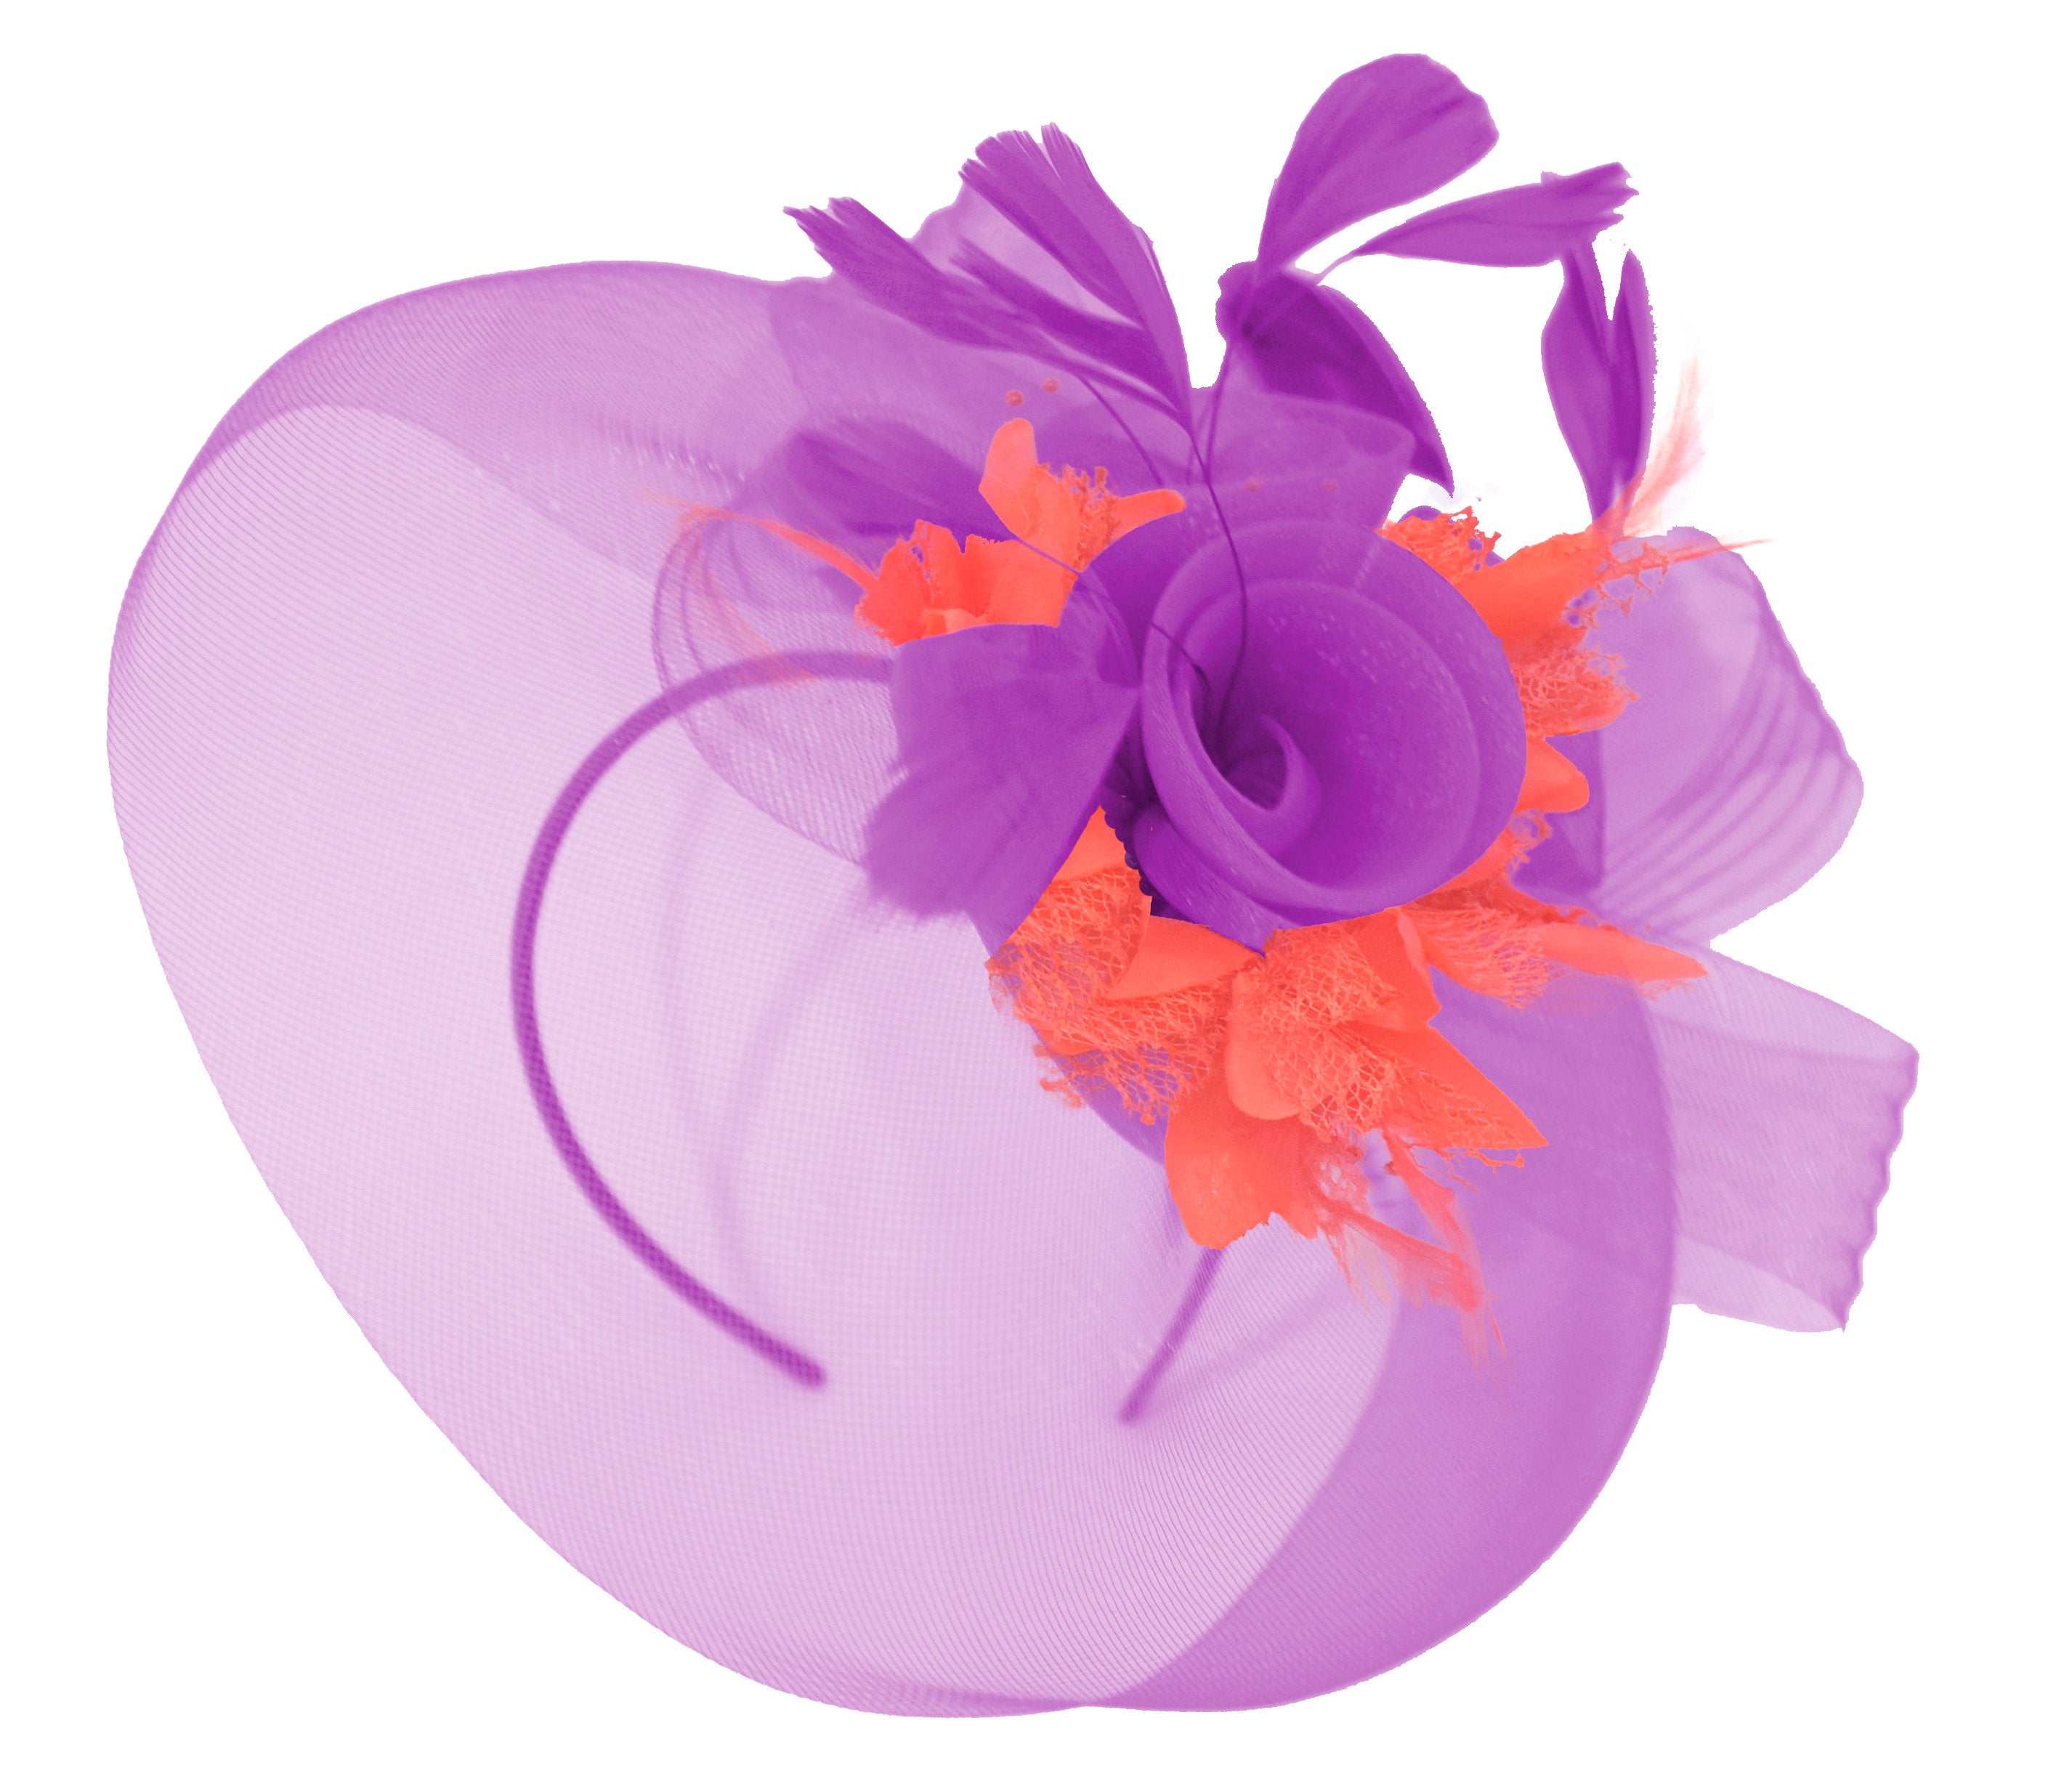 Caprilite Purple and Coral Fascinator on Headband Veil UK Wedding Ascot Races Hatinator